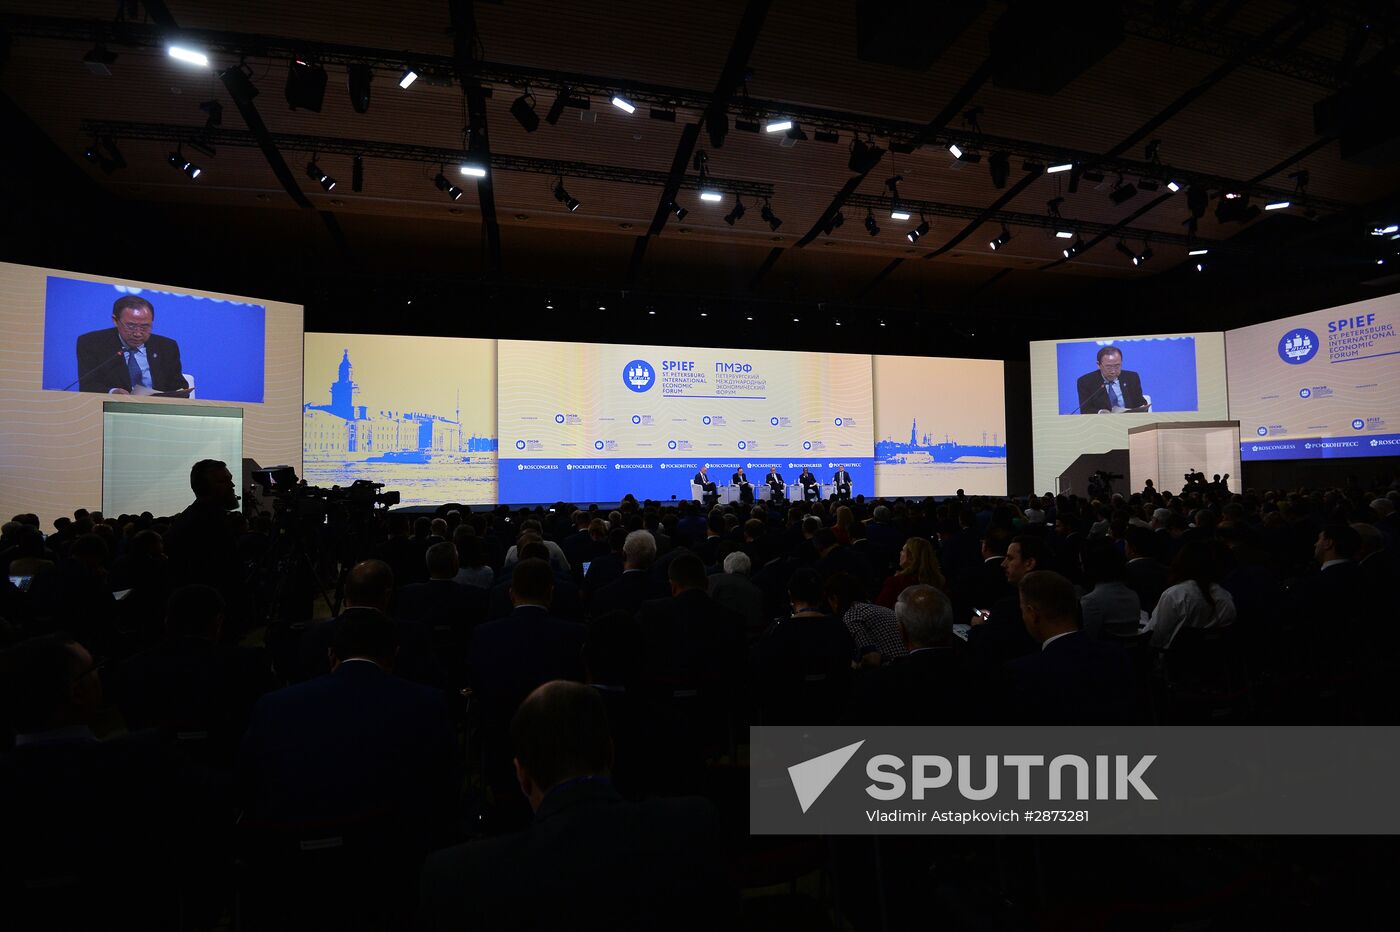 Opening ceremony of the St. Petersburg International Economic Forum